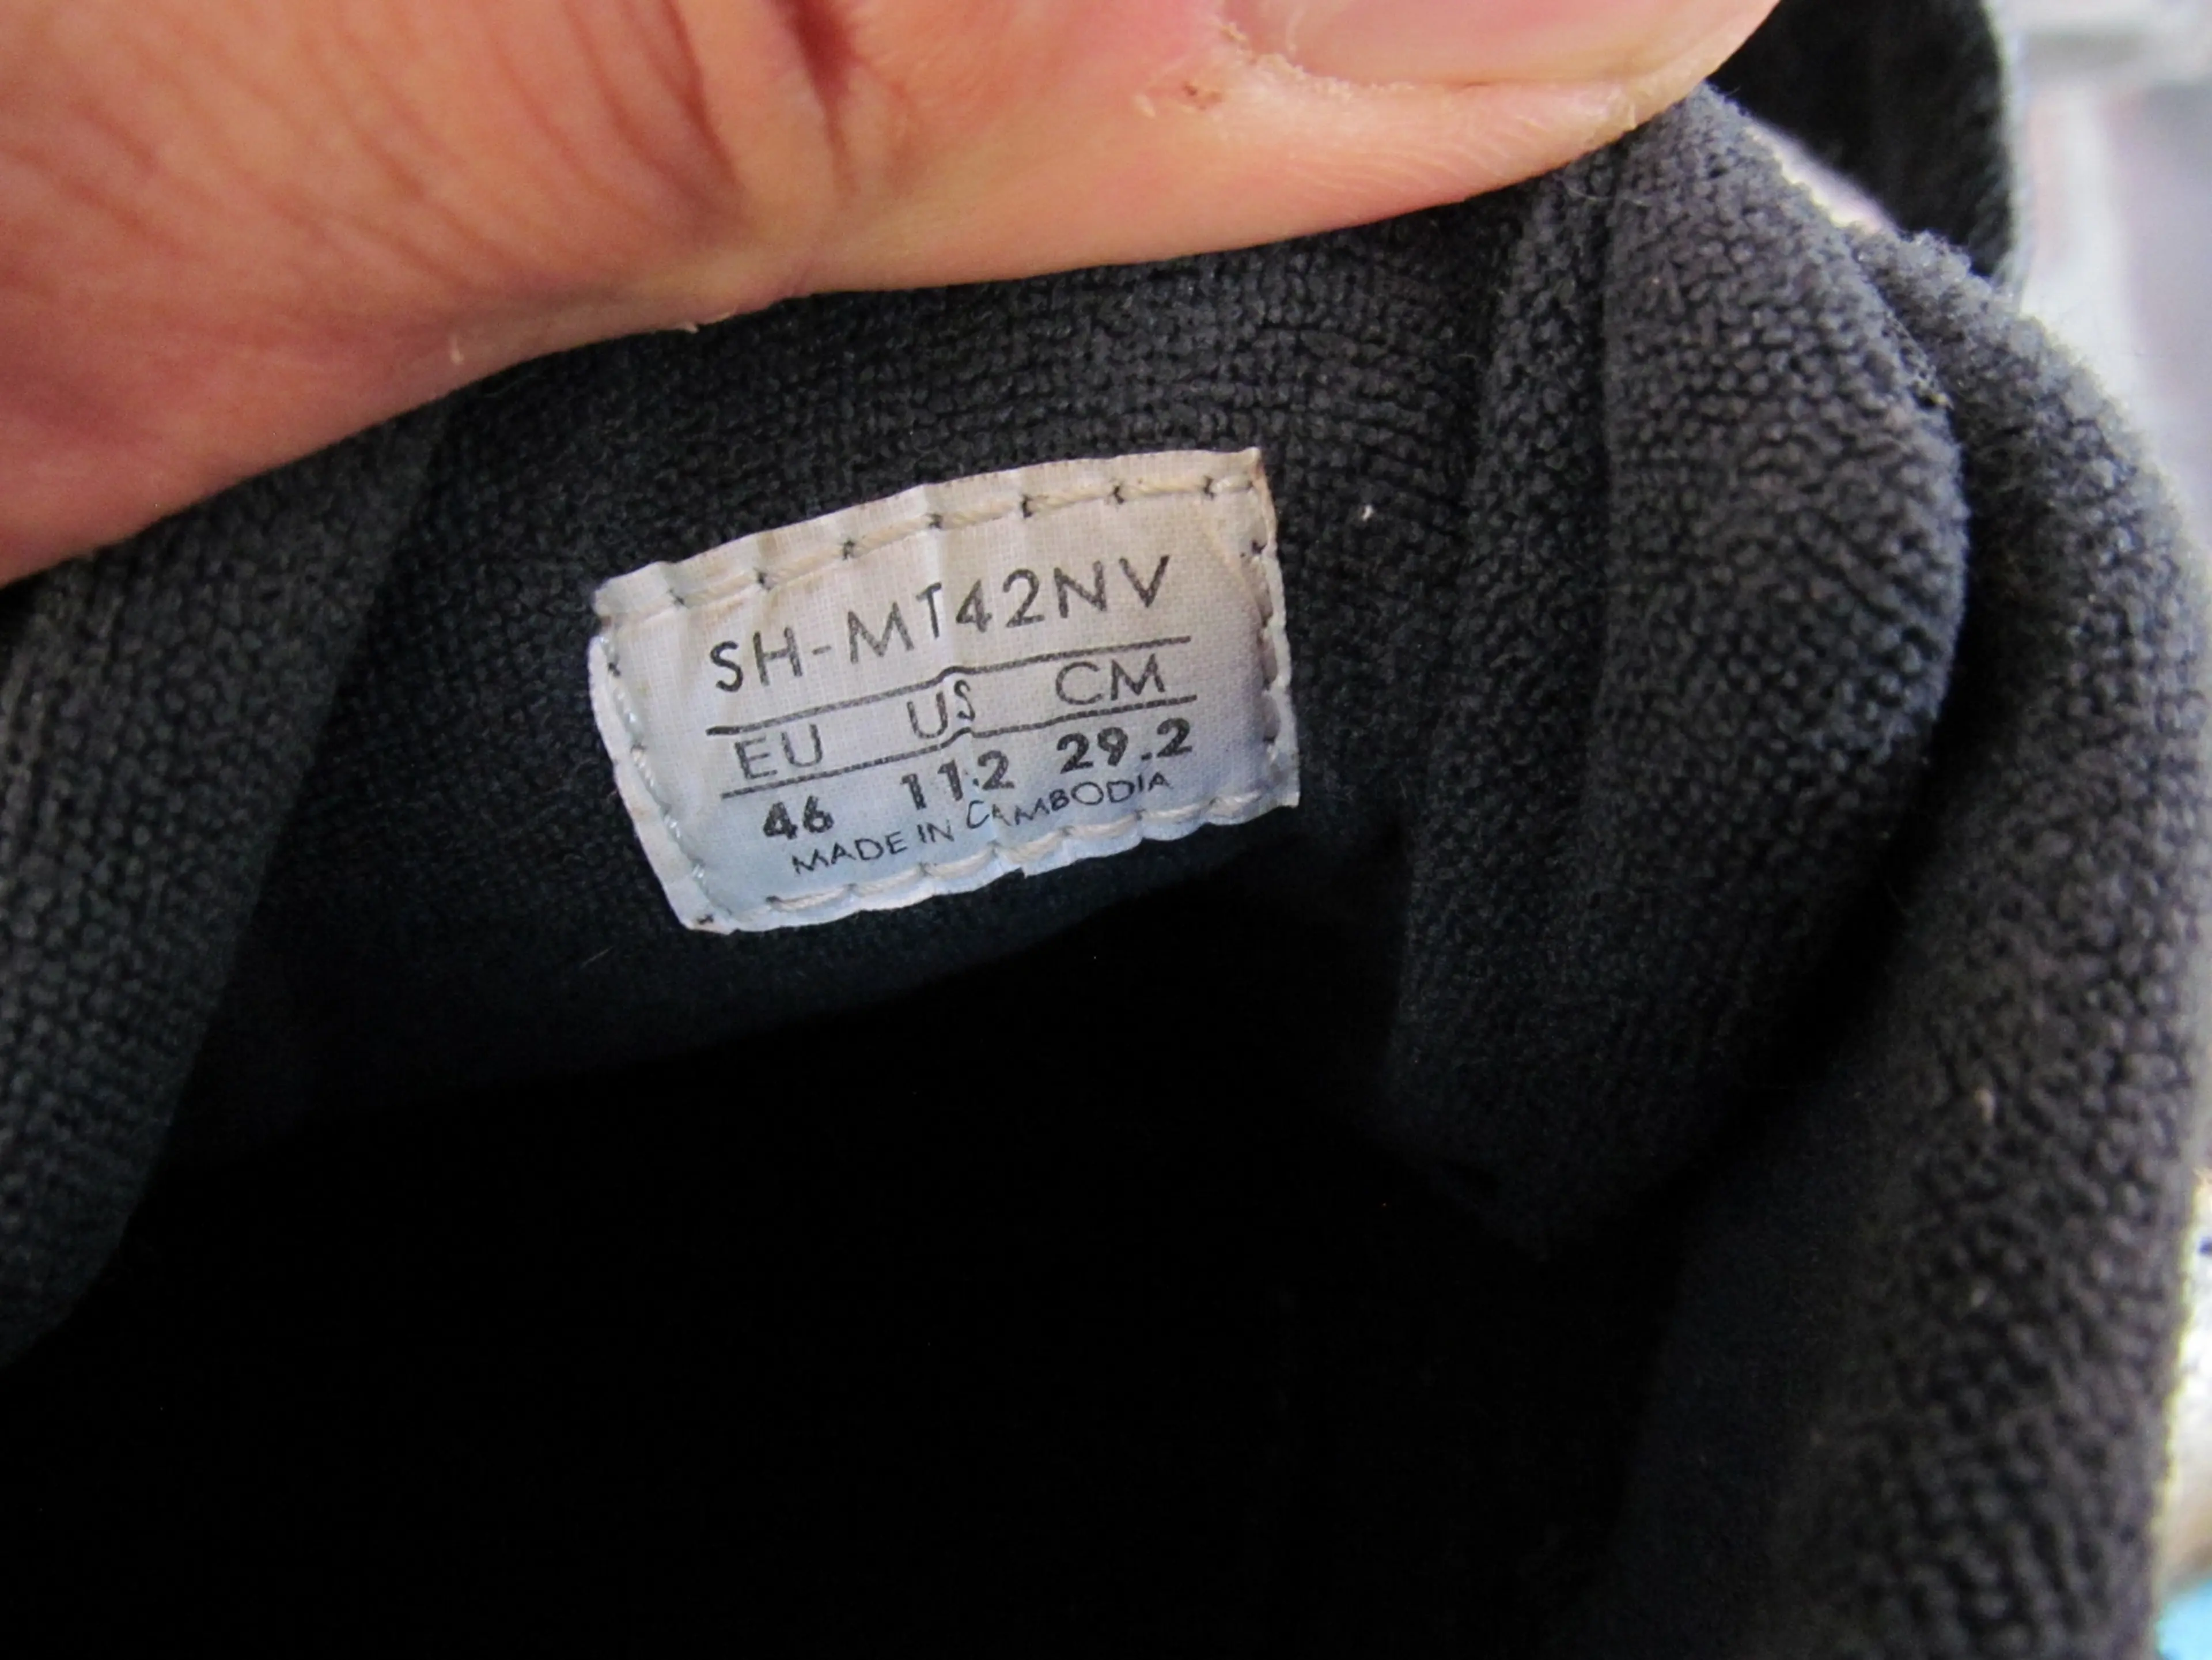 Image Pantofi Shimano  SH-MT42NV nr 46  ,29.2 cm